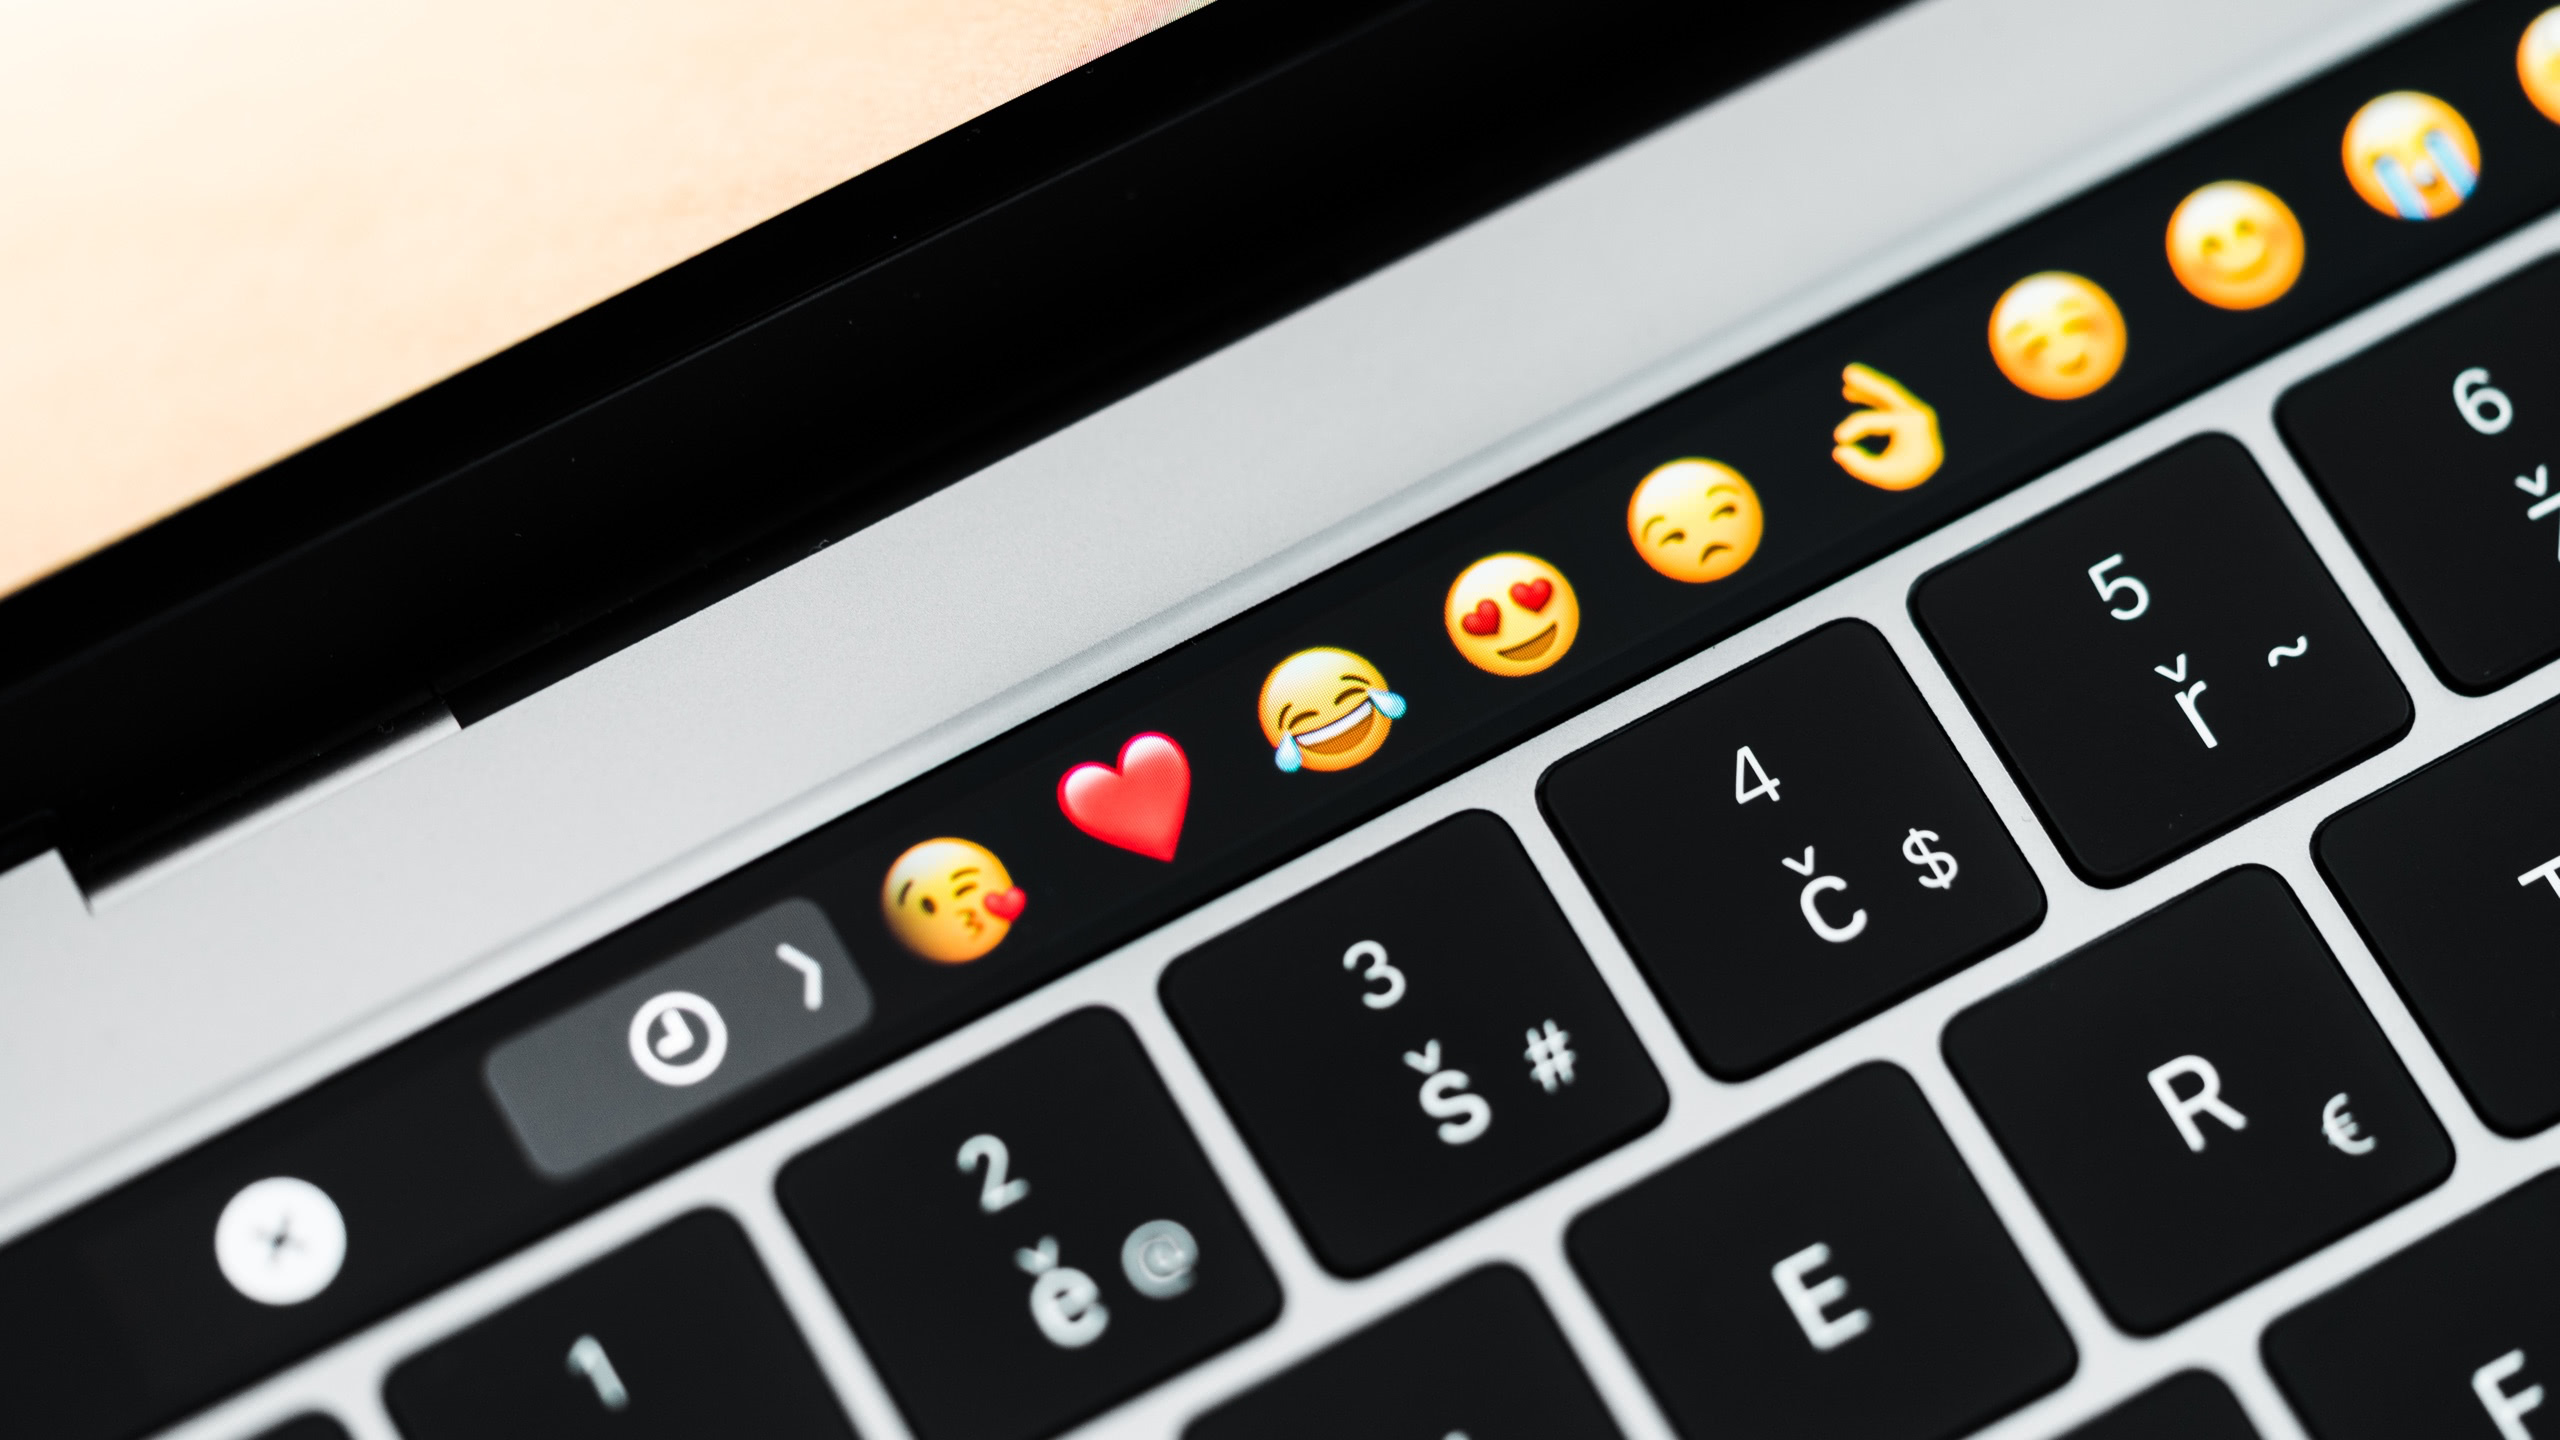 emoji macbook pro touch bar 16x9